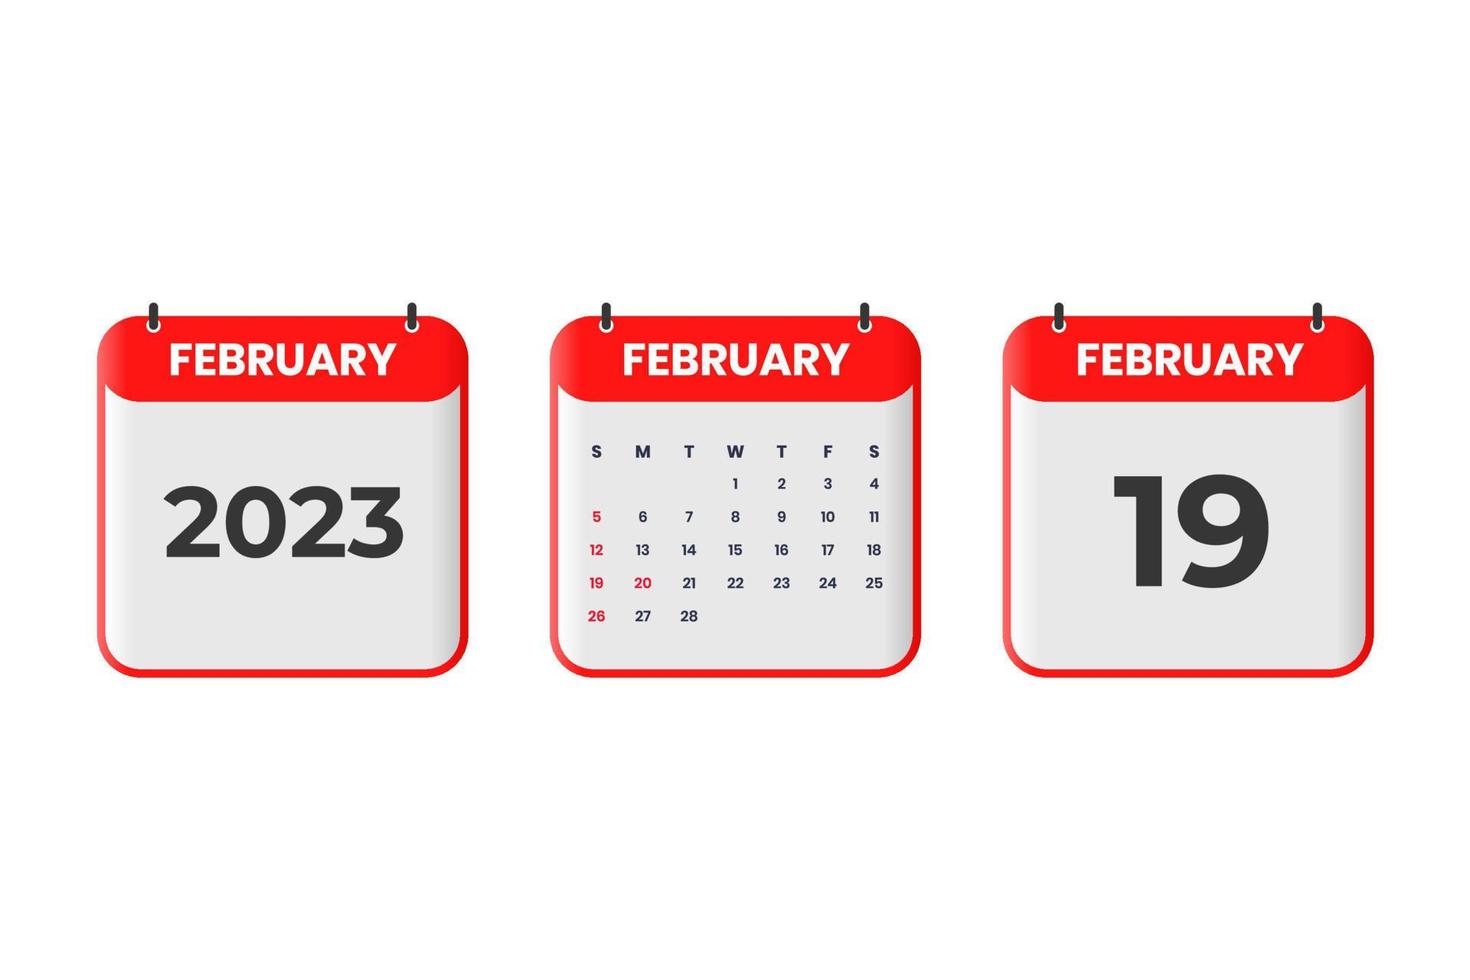 Februar 2023 Kalenderdesign. 19. Februar 2023 Kalendersymbol für Zeitplan, Termin, wichtiges Datumskonzept vektor